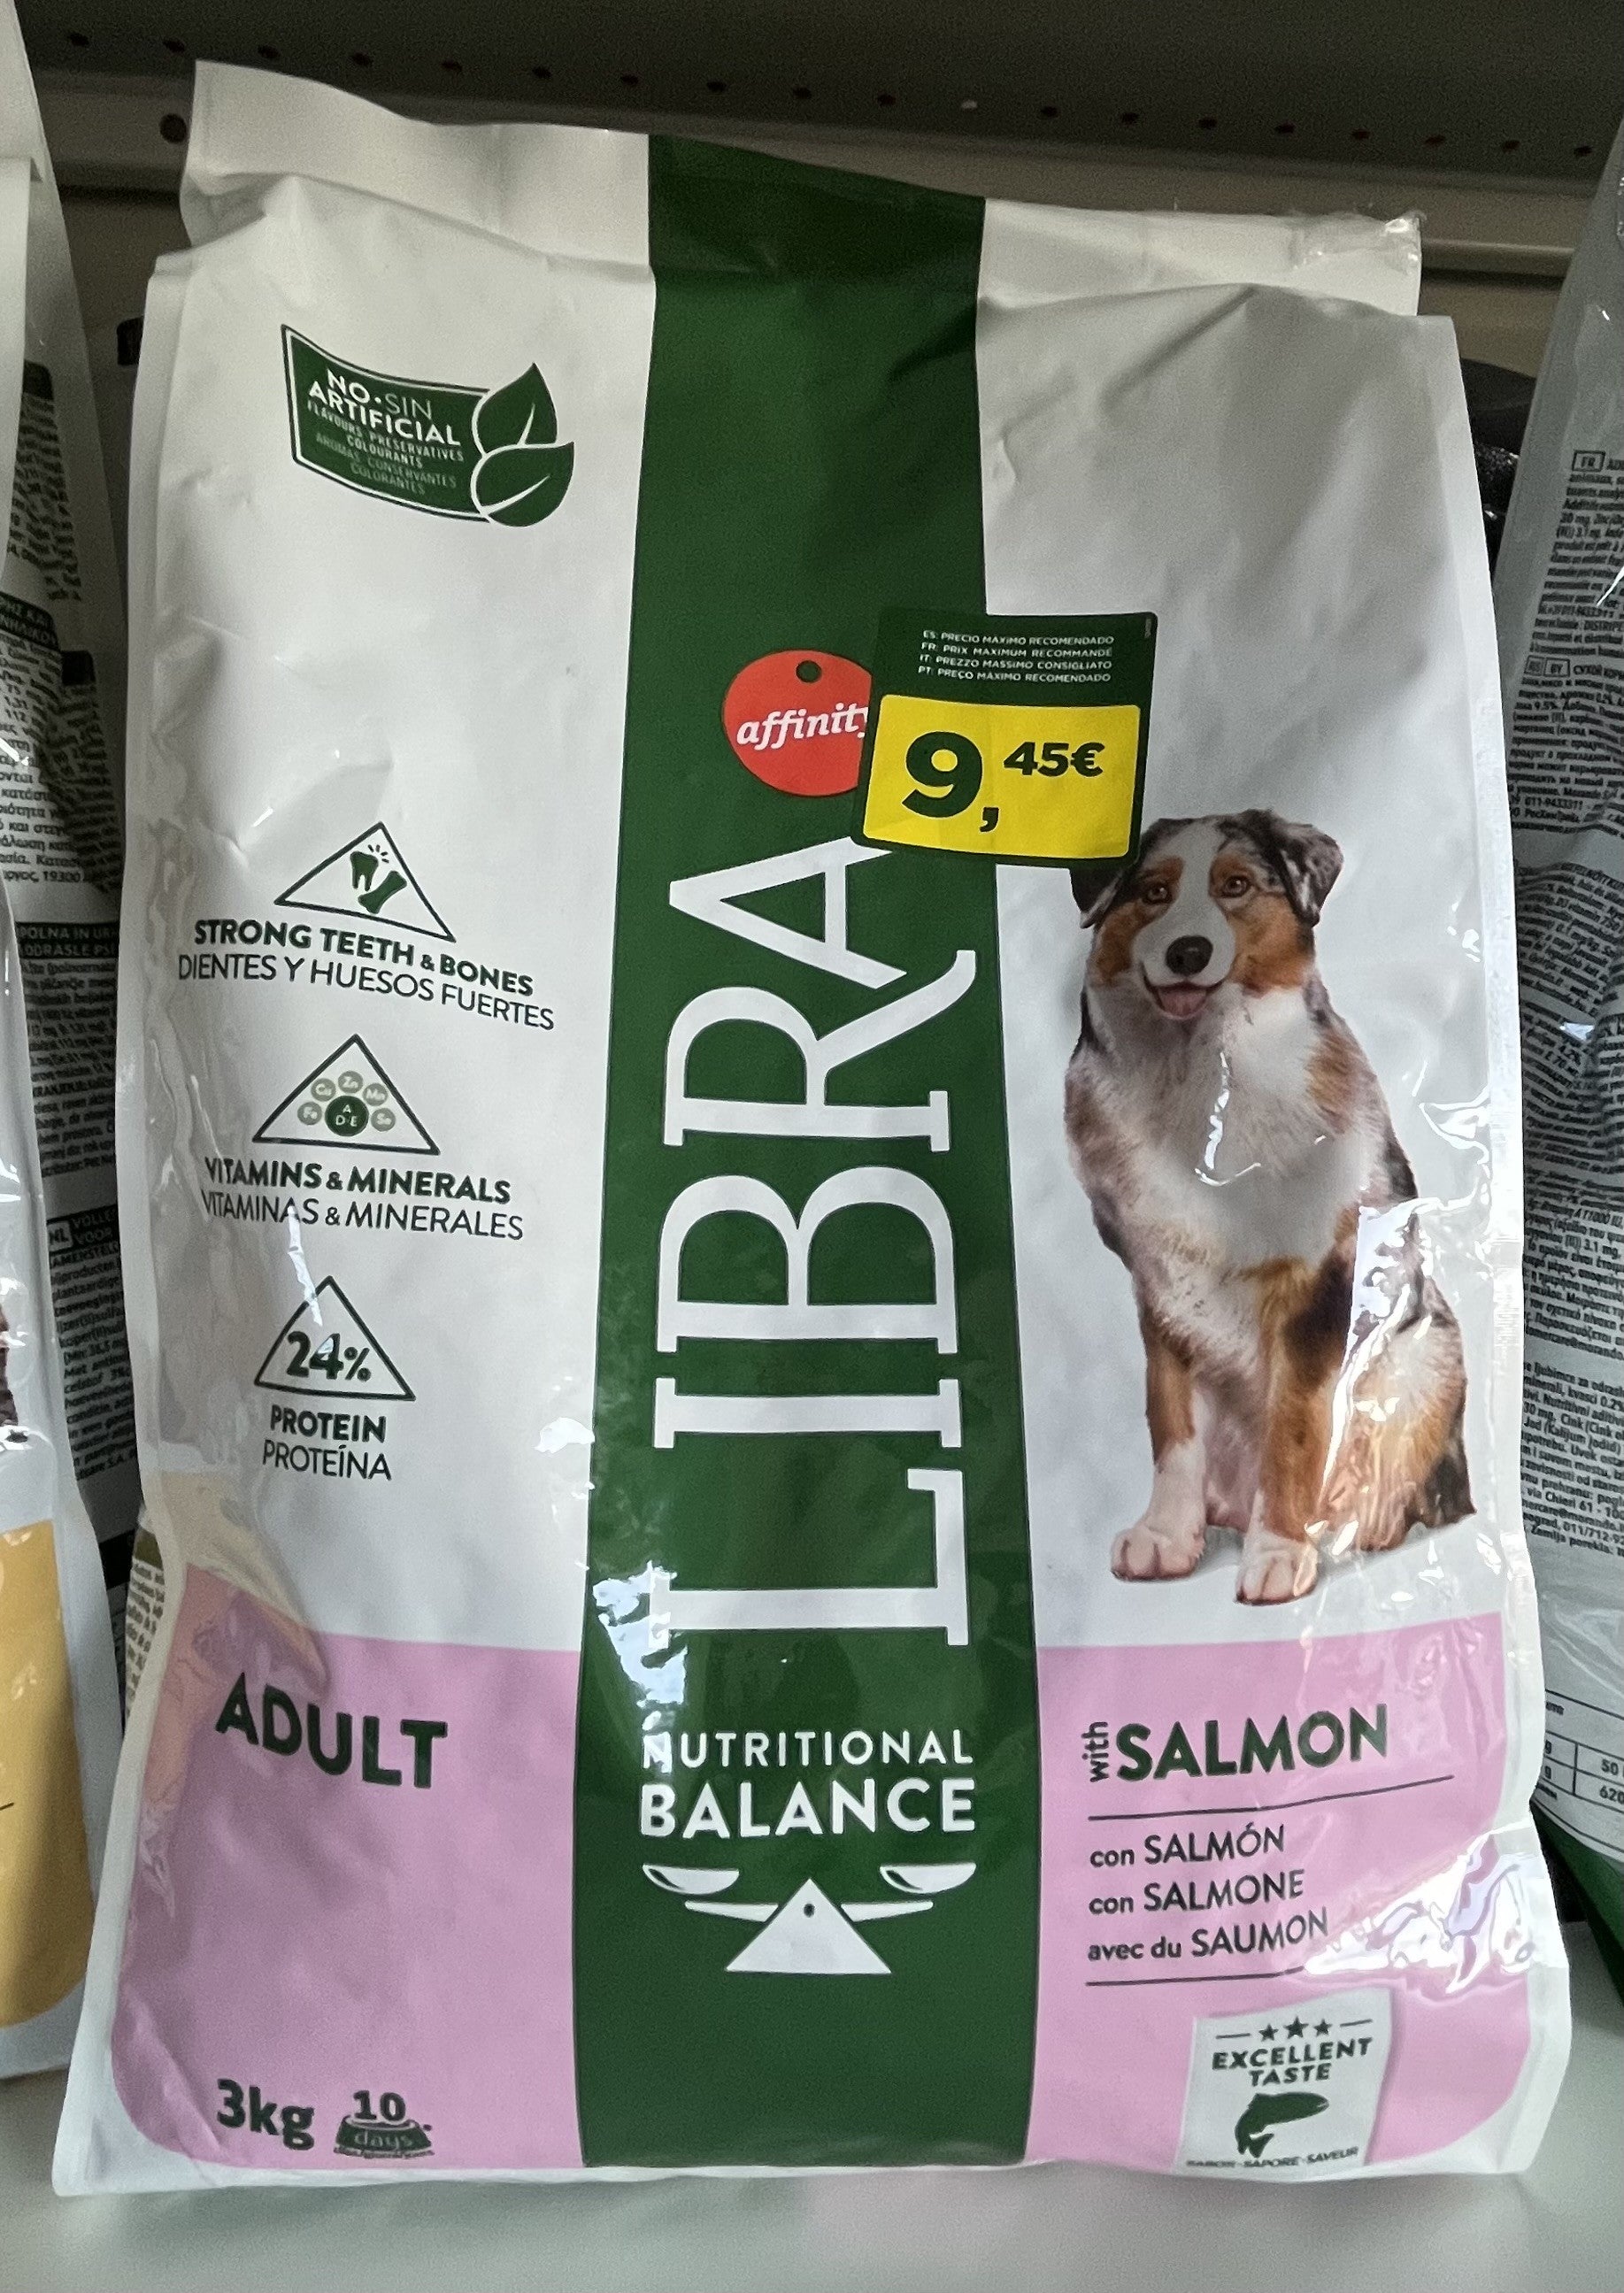 Pets - Libra - Croccantini - Nutritional - Bilance - Salmone - Cani - Adulto - Proteine - 3 Kg